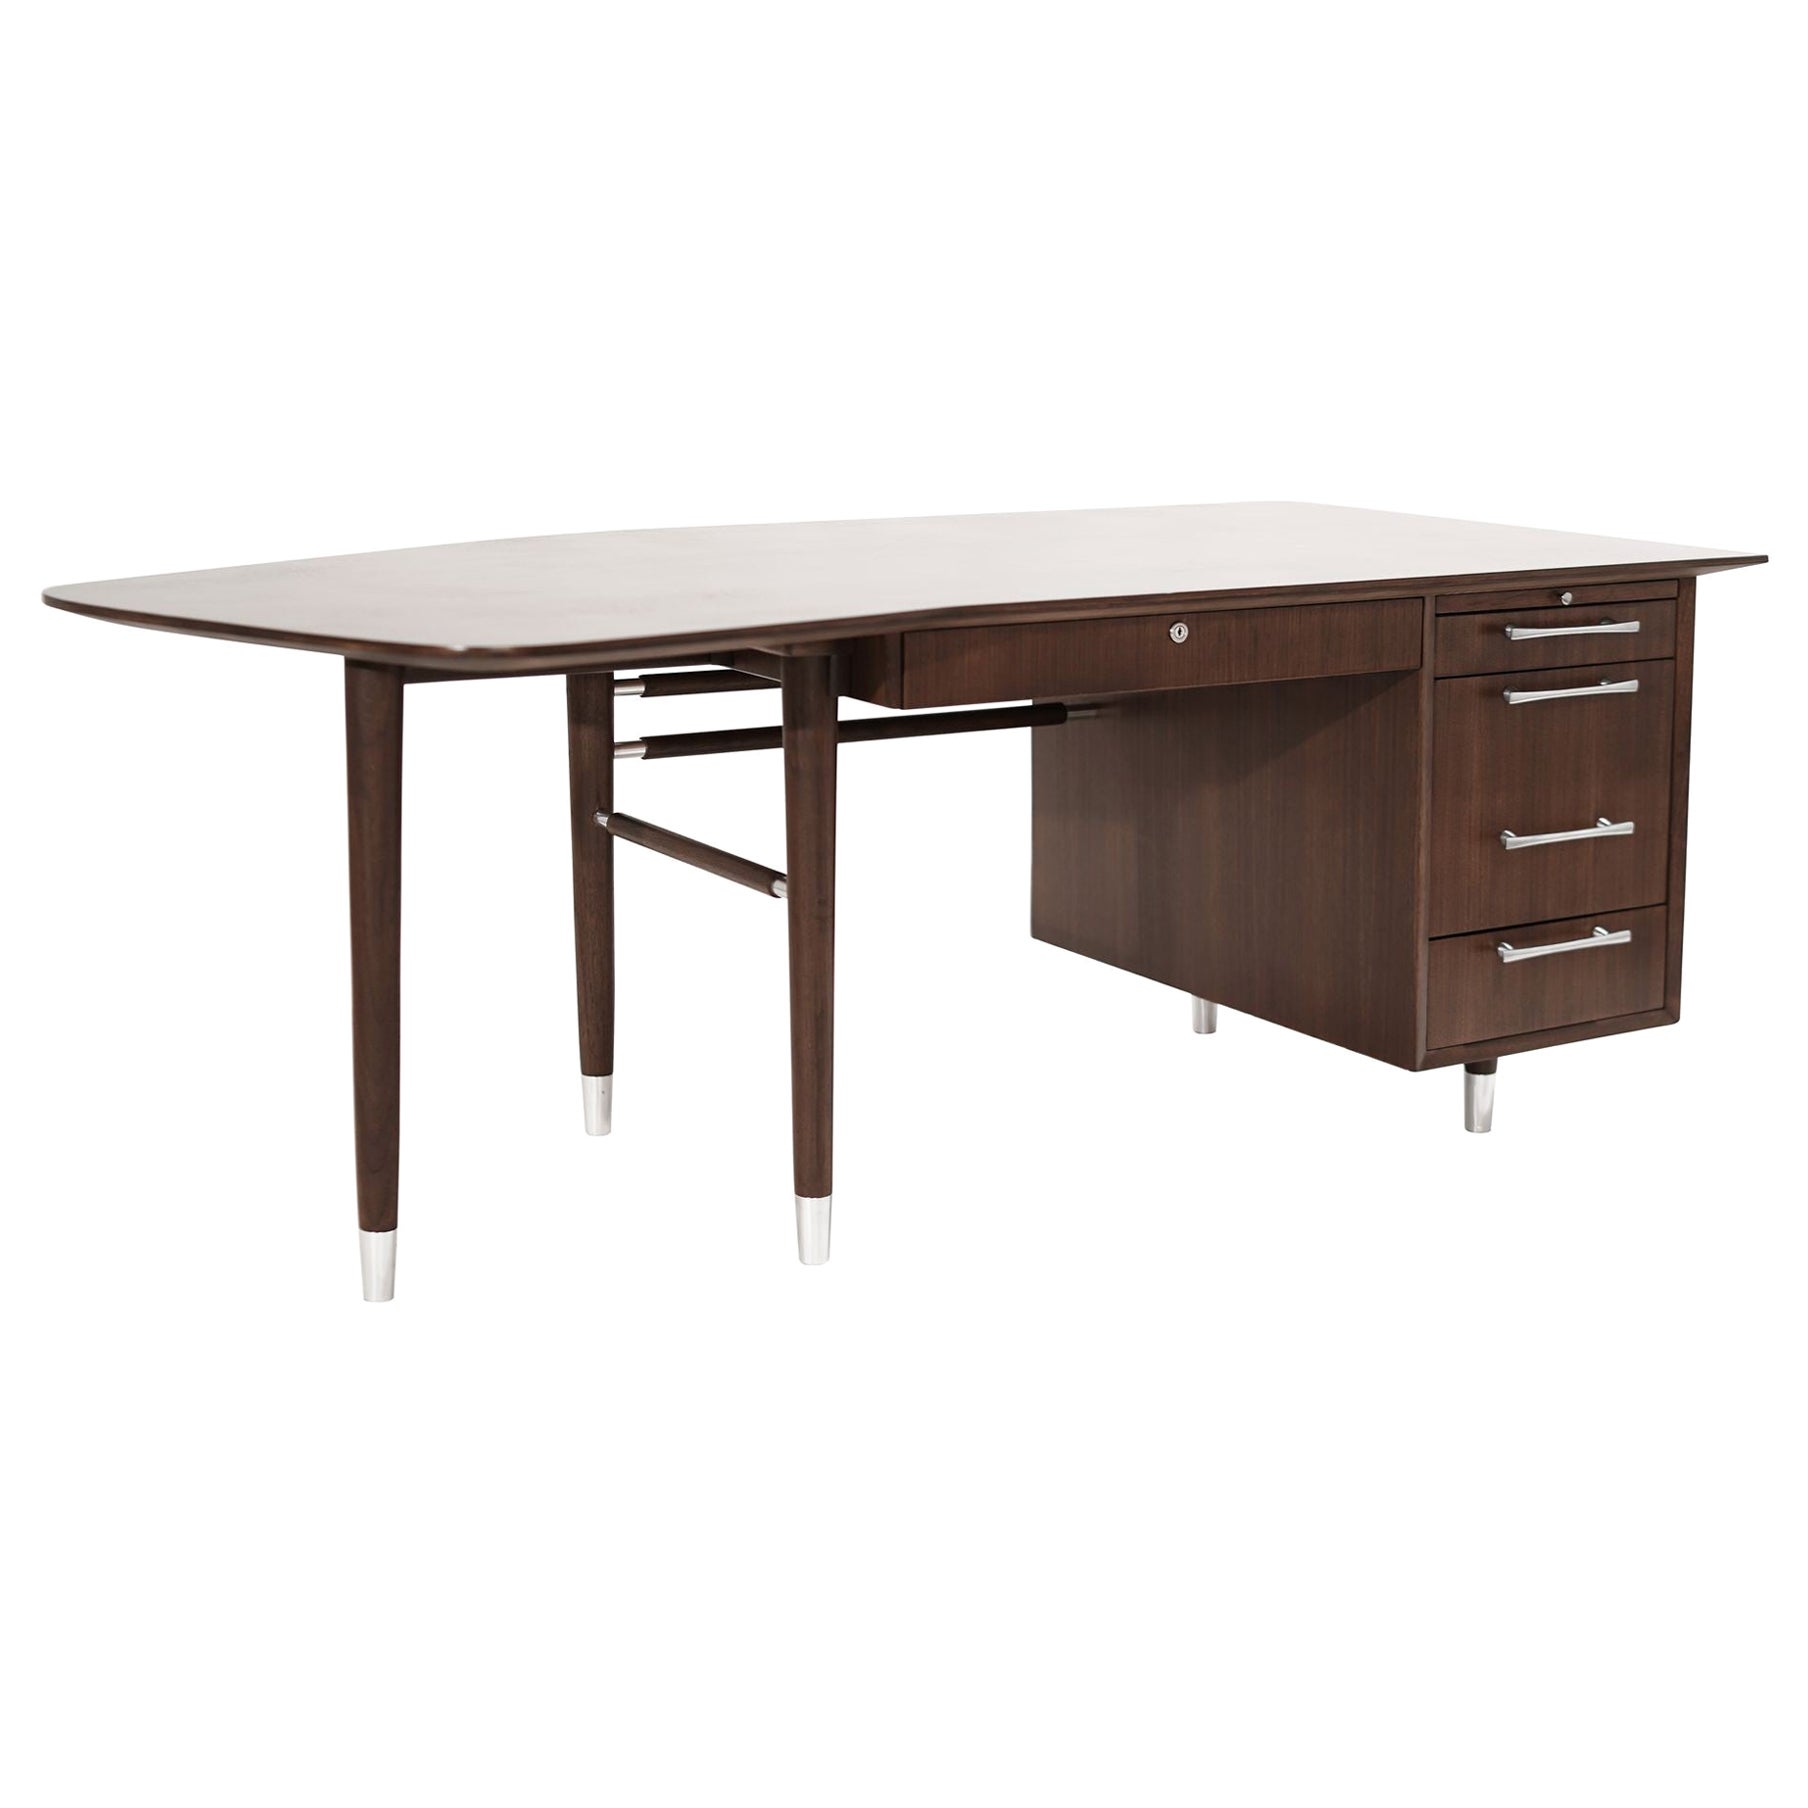 Asymmetric Walnut Desk w/ Nickel Accents, C. 1950s For Sale